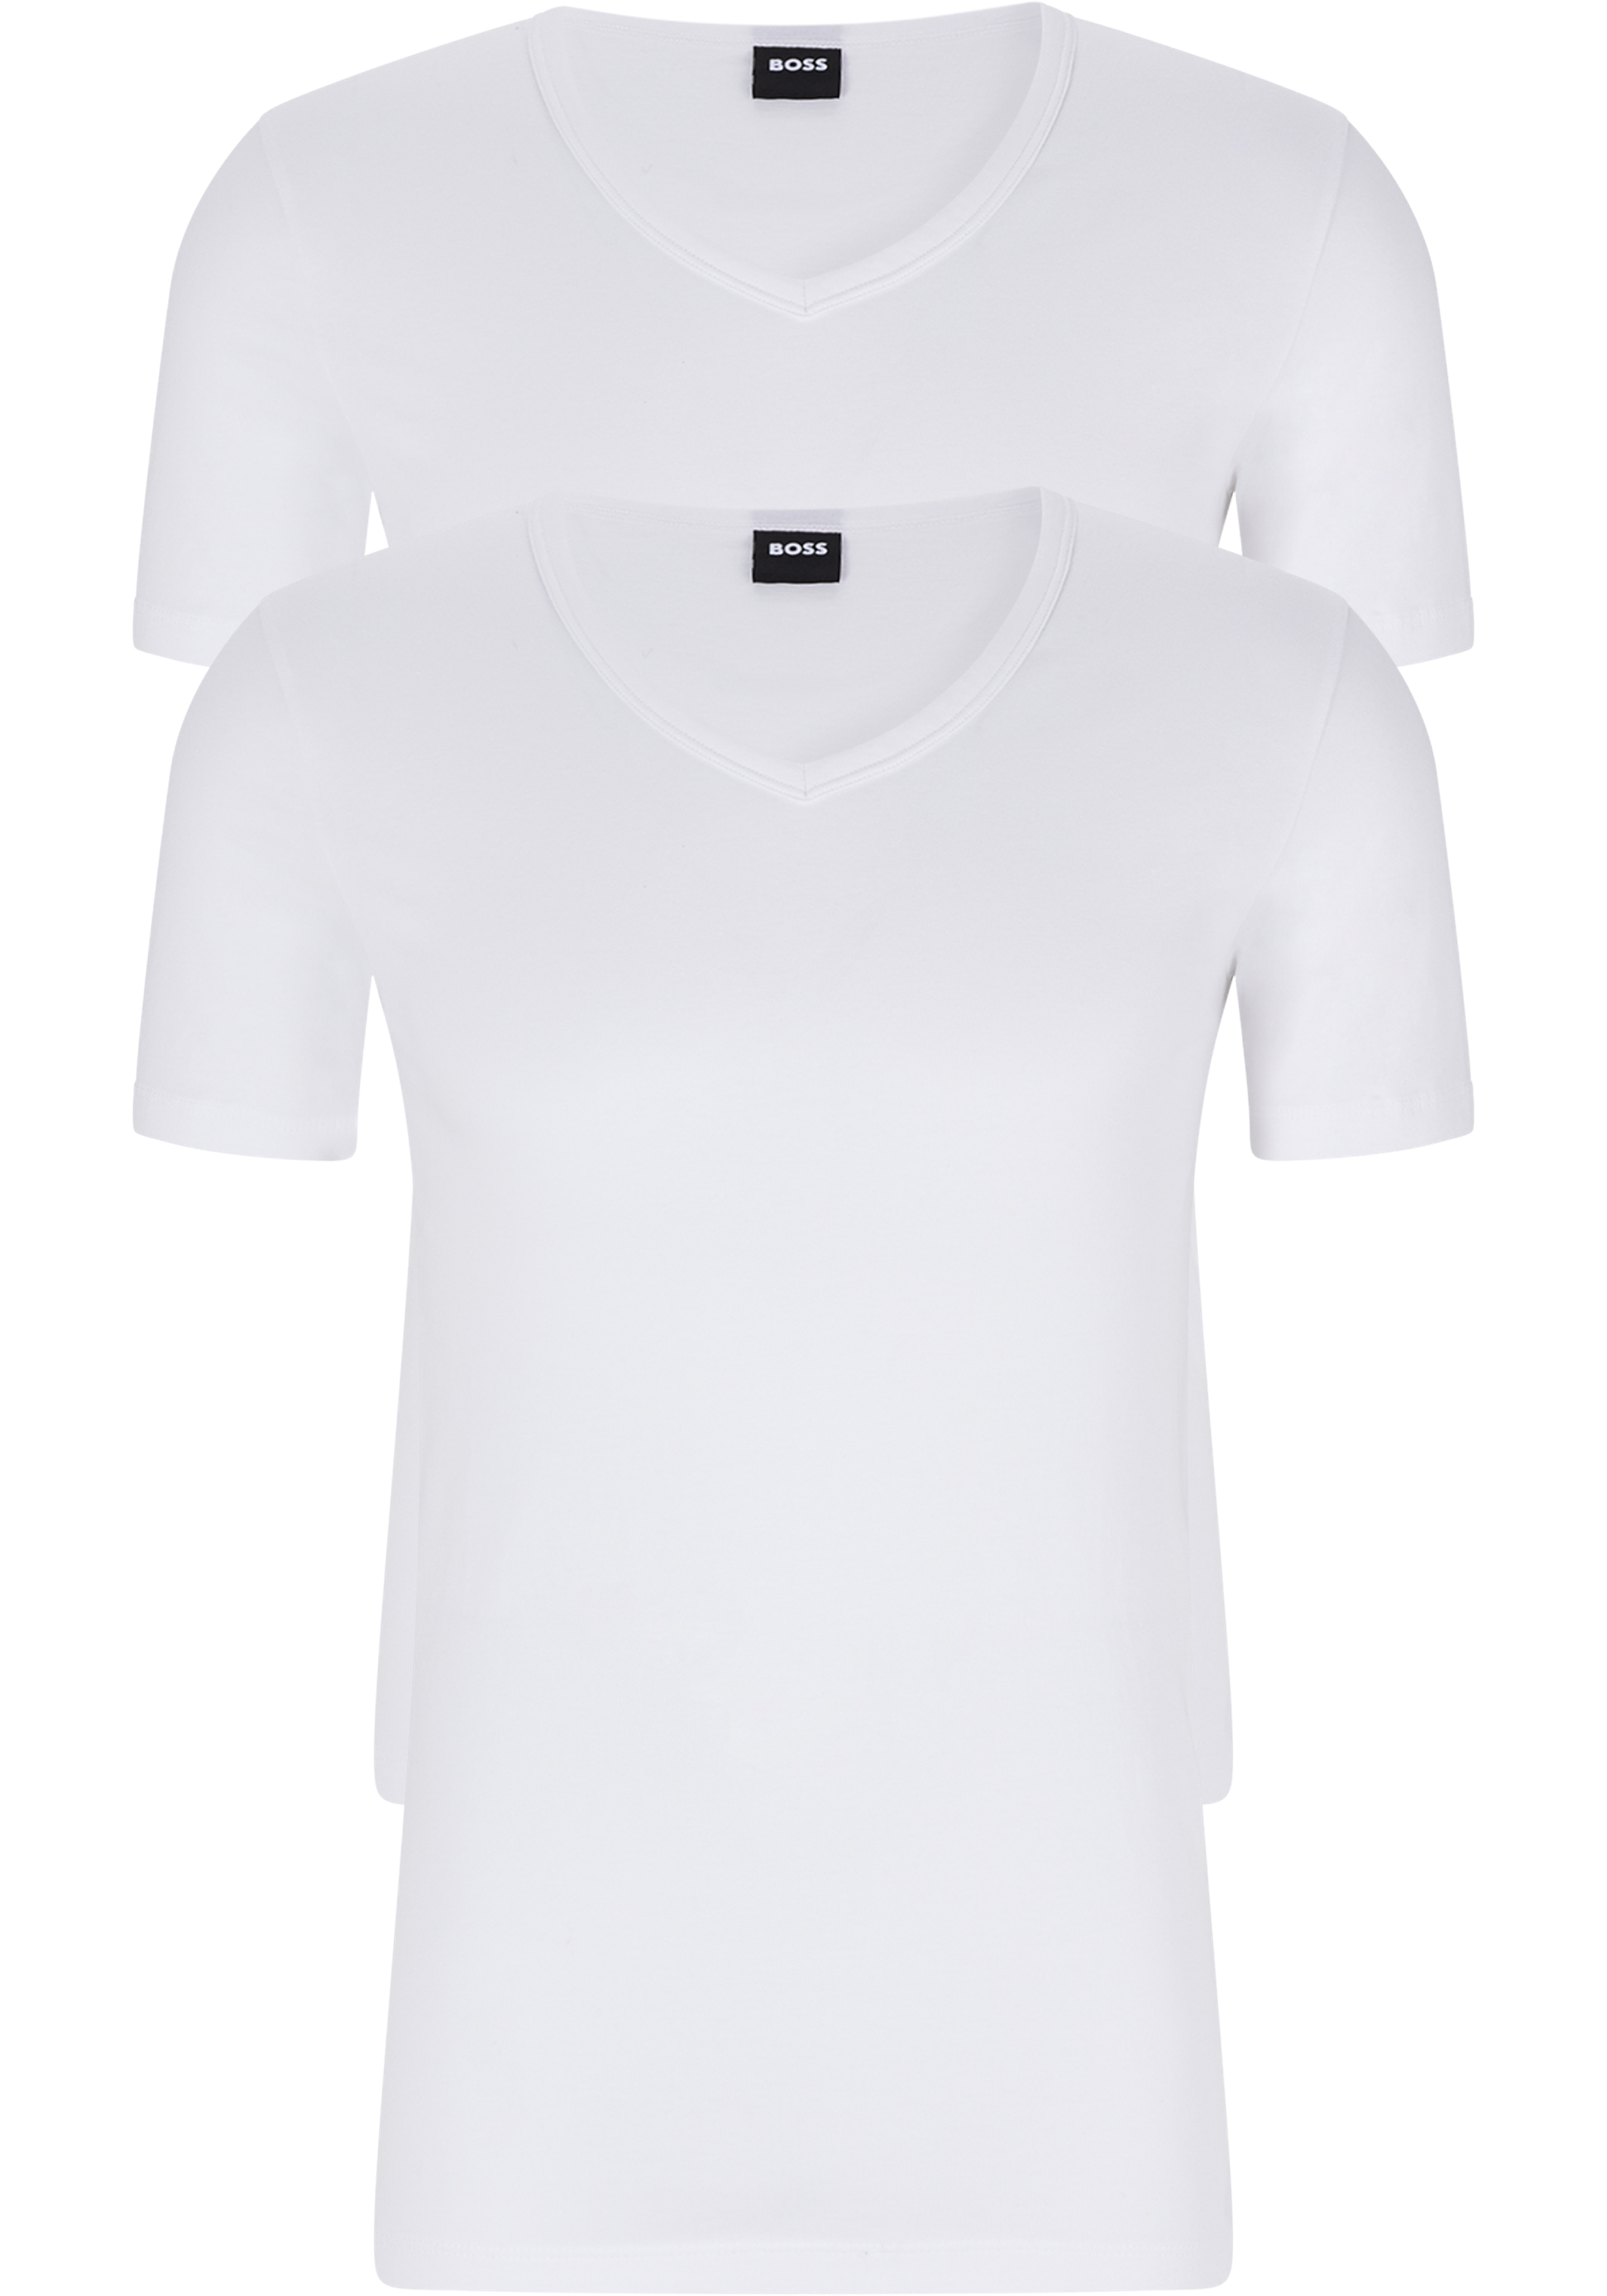 HUGO BOSS Modern stretch T-shirts slim fit (2-pack), heren T-shirts... - Shop de nieuwste